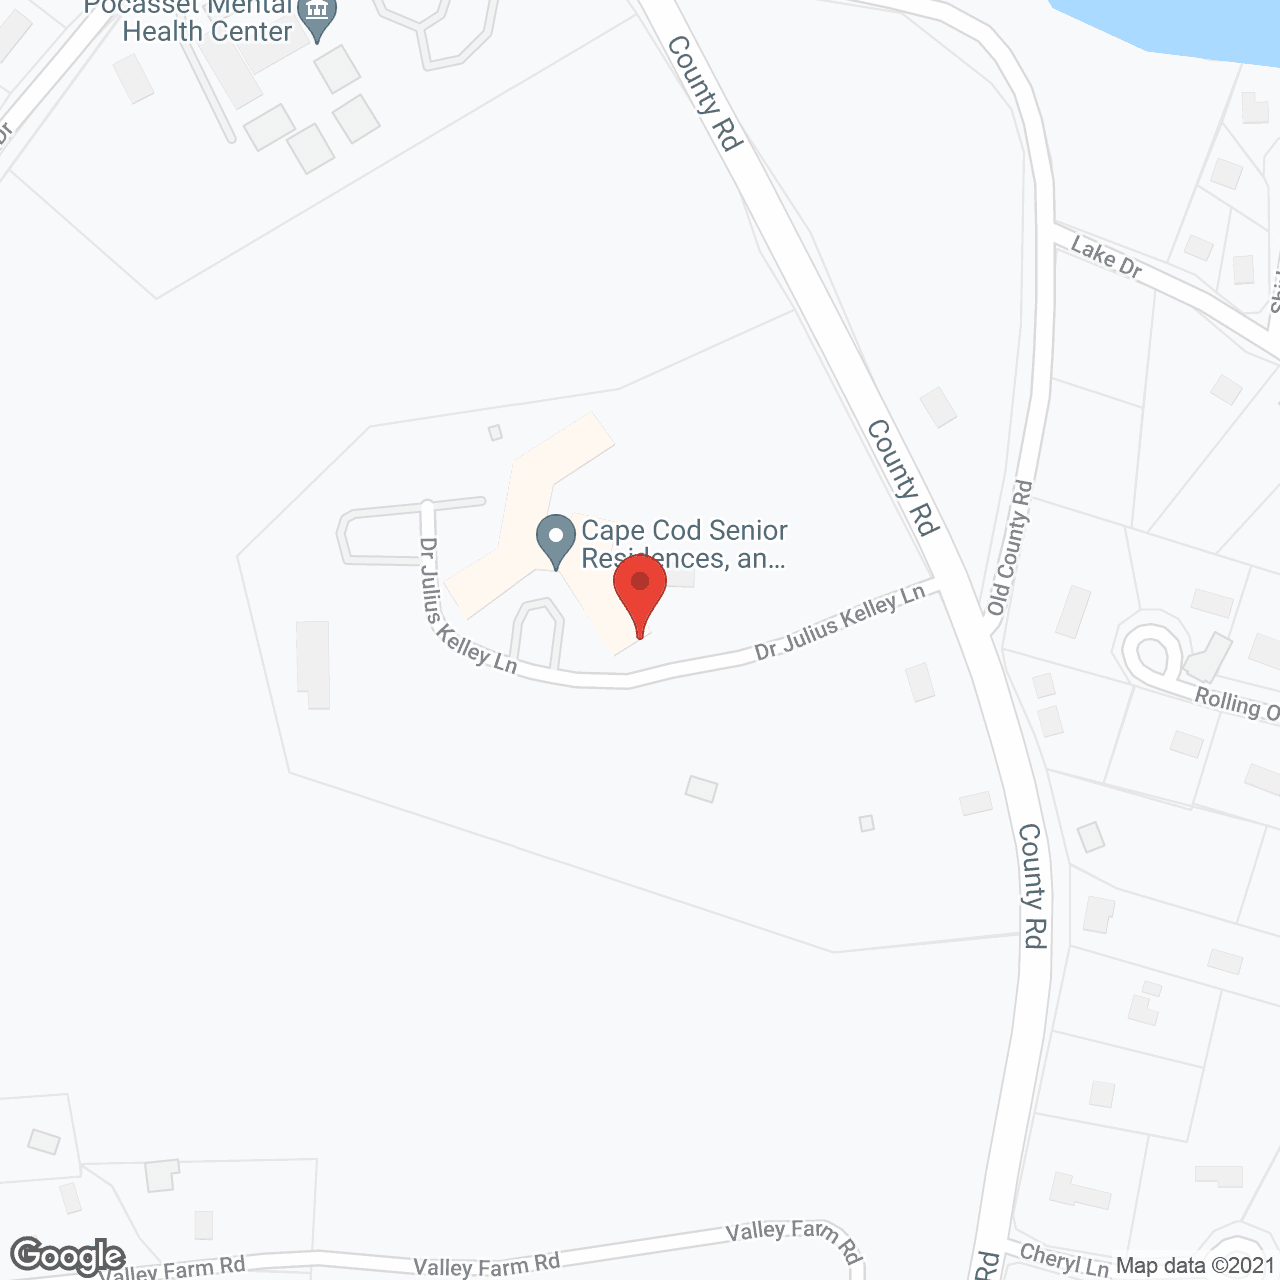 Cape Cod Senior Residences in google map